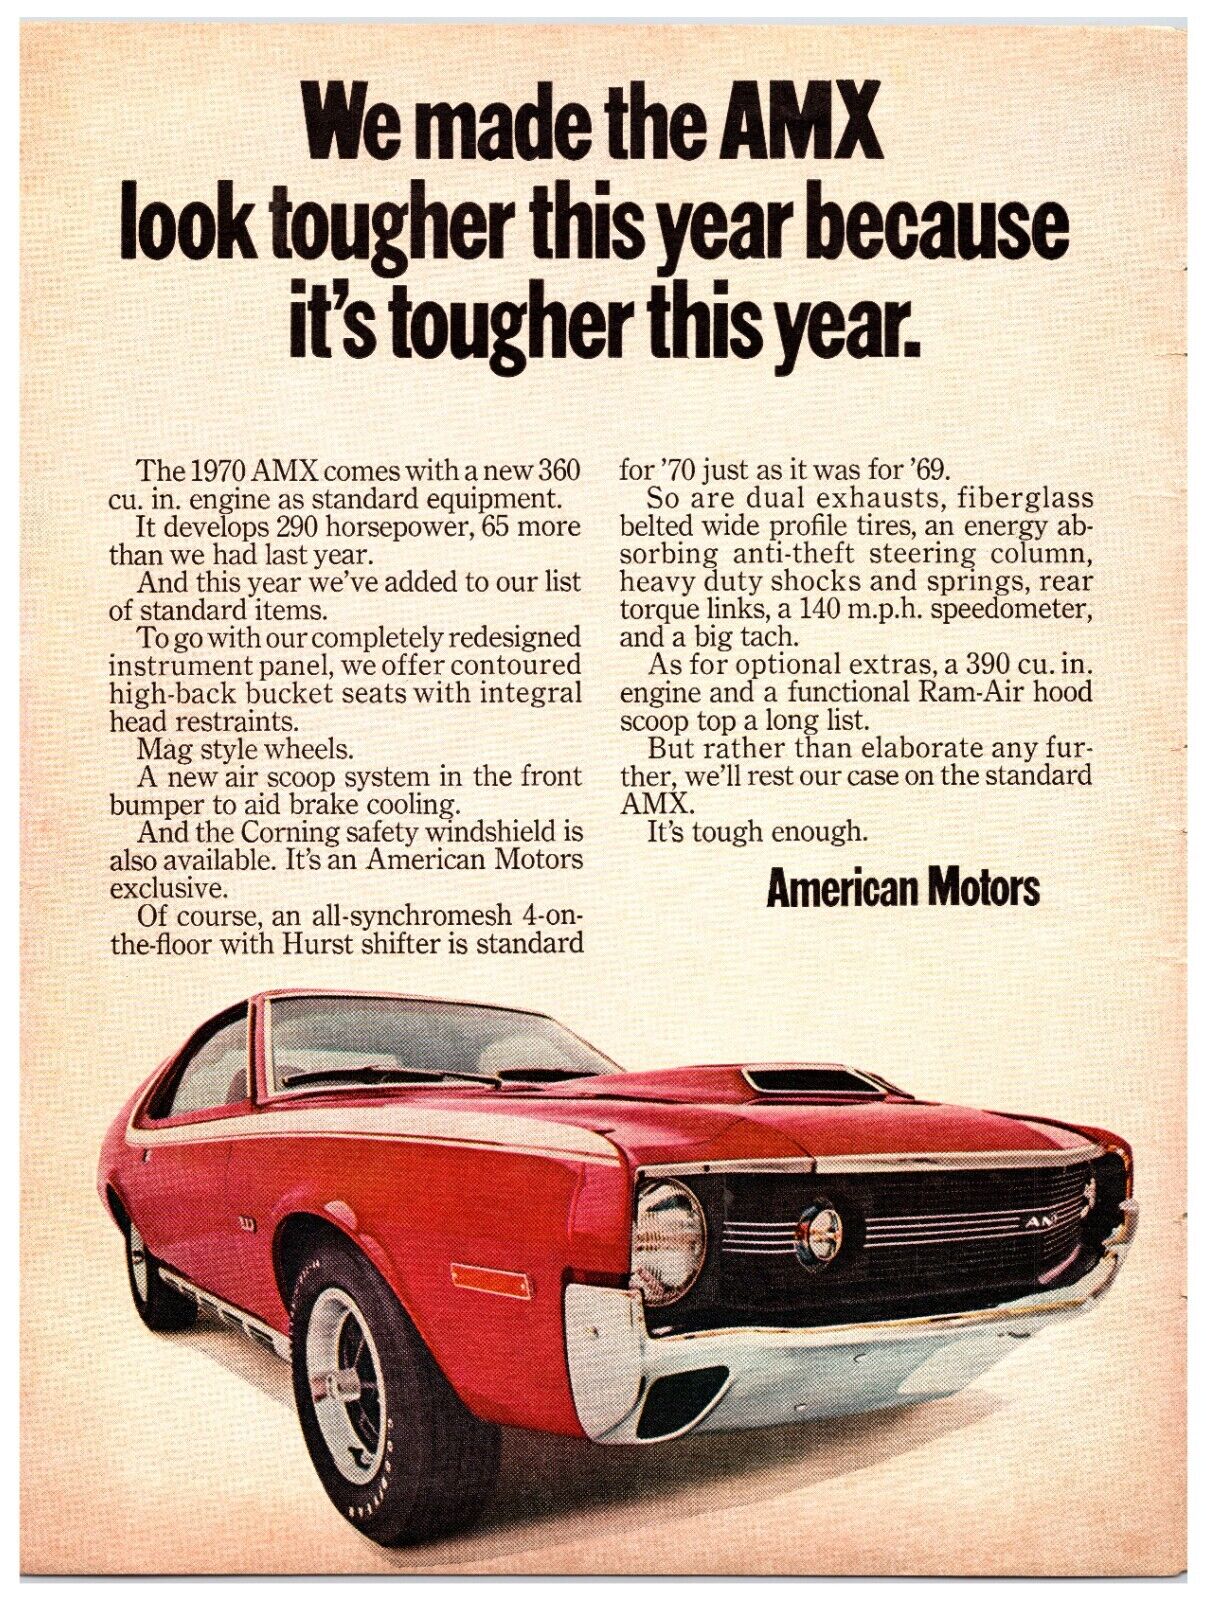 Original 1970 AMC AMX Car - Print Advertisement (8x11) *Vintage Original*